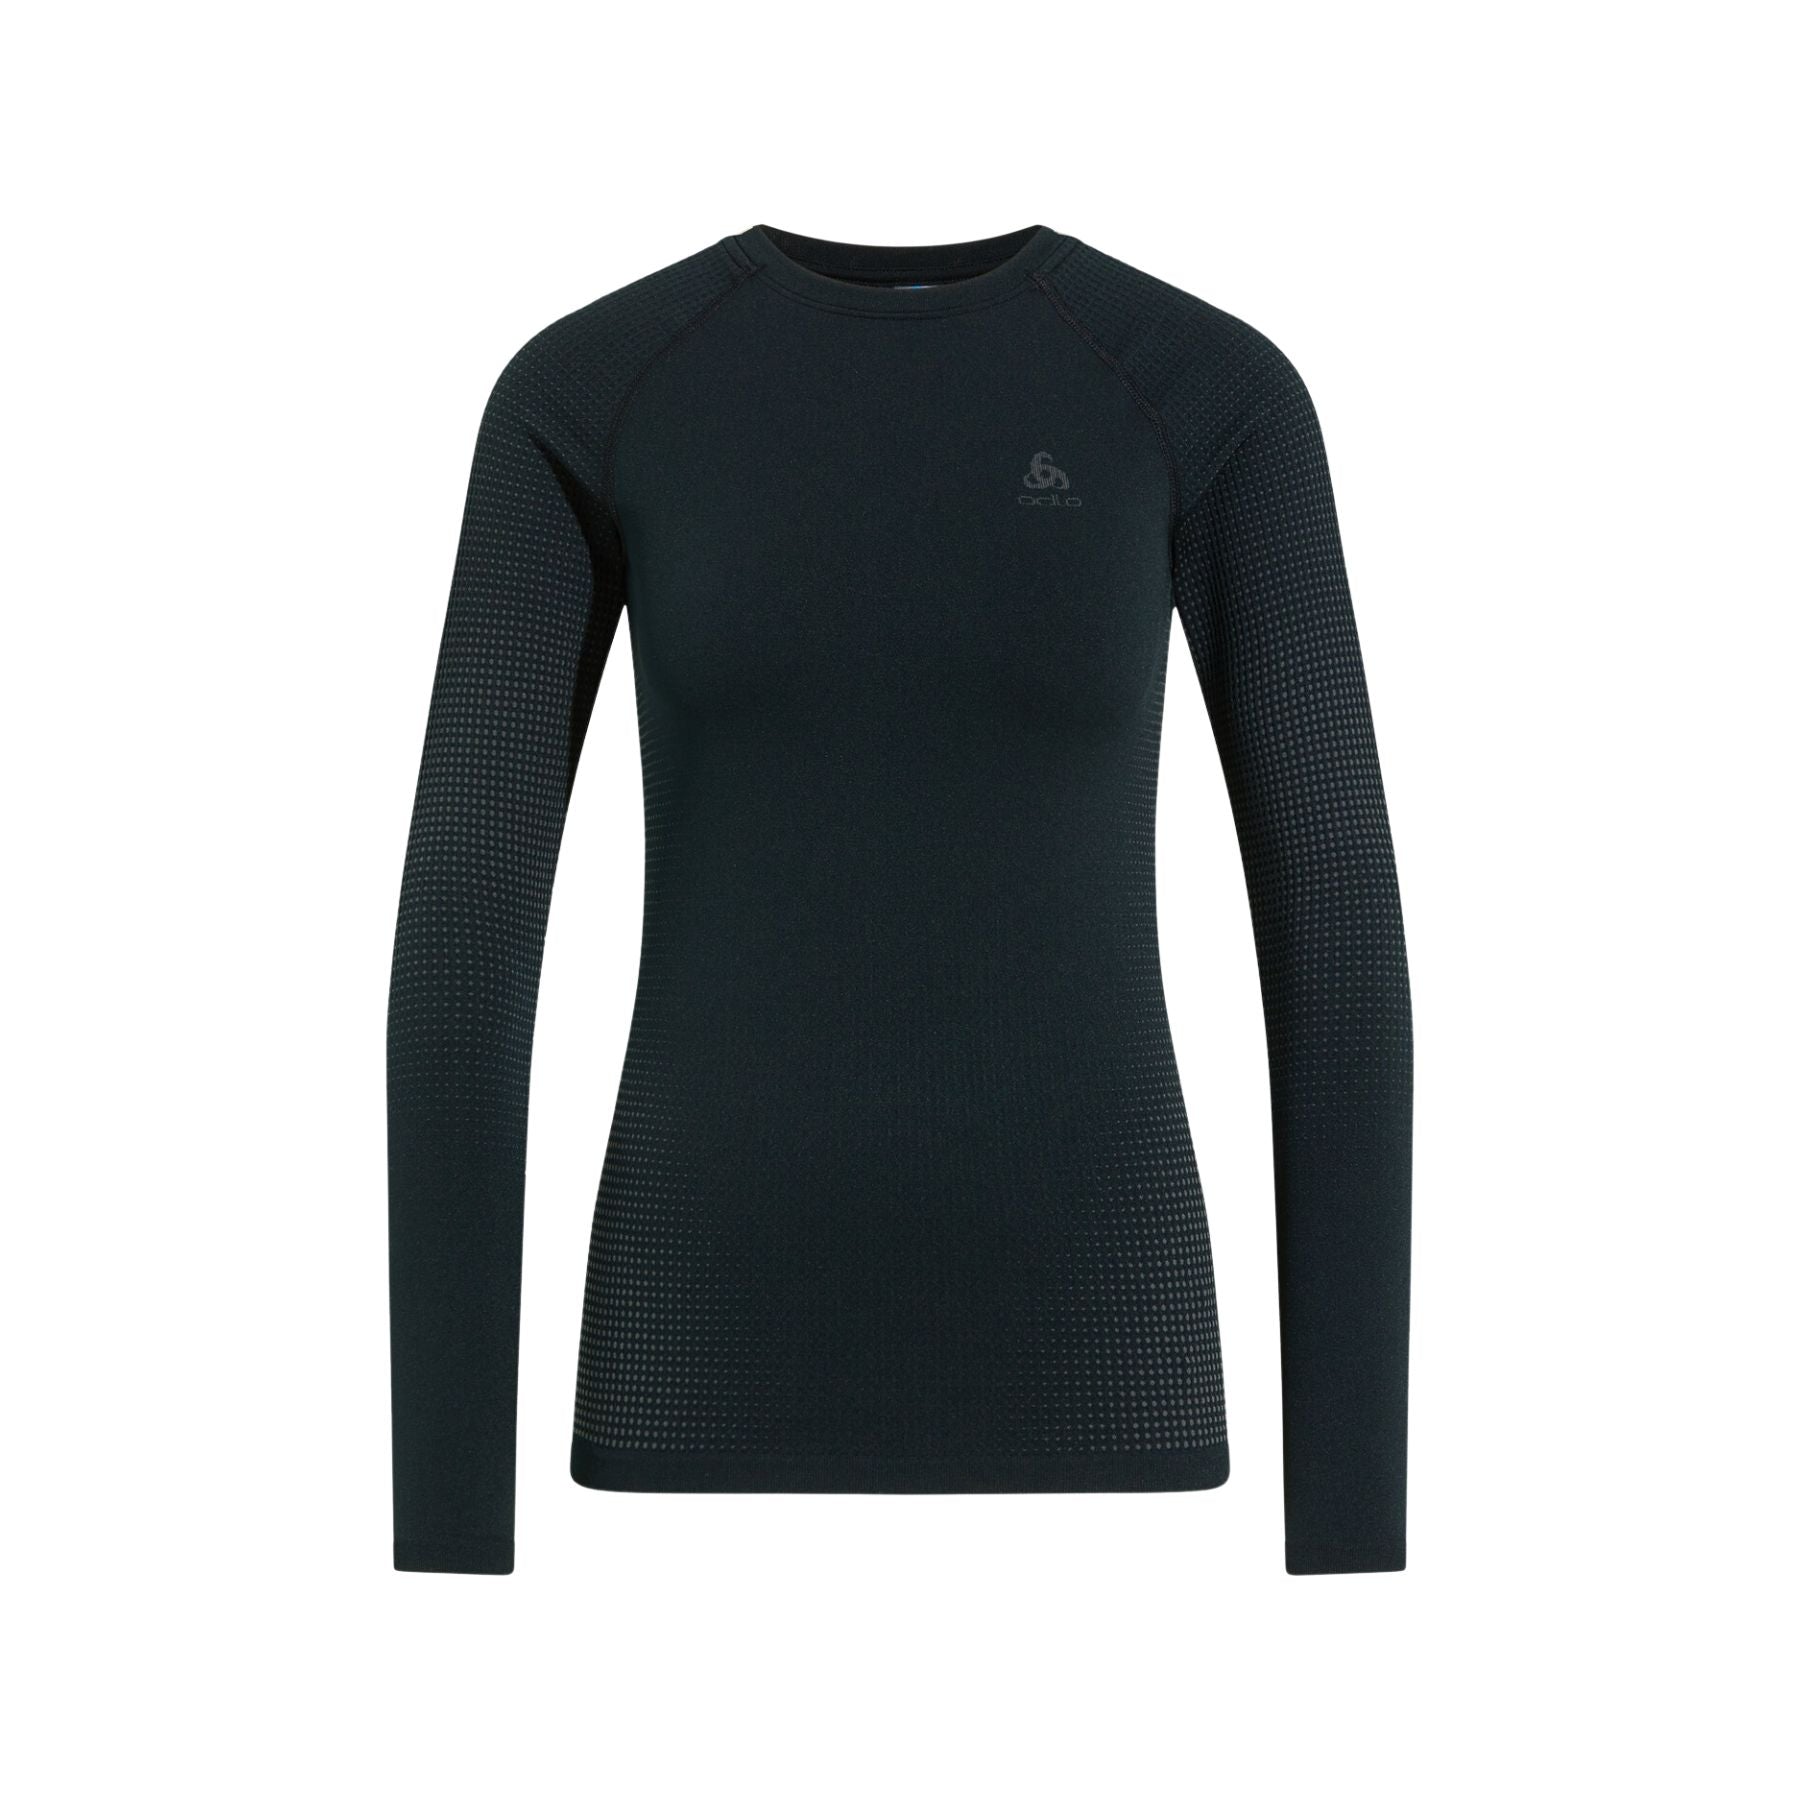 Odlo Women's Performance Warm Base Layer Top in Black/Graphite Grey